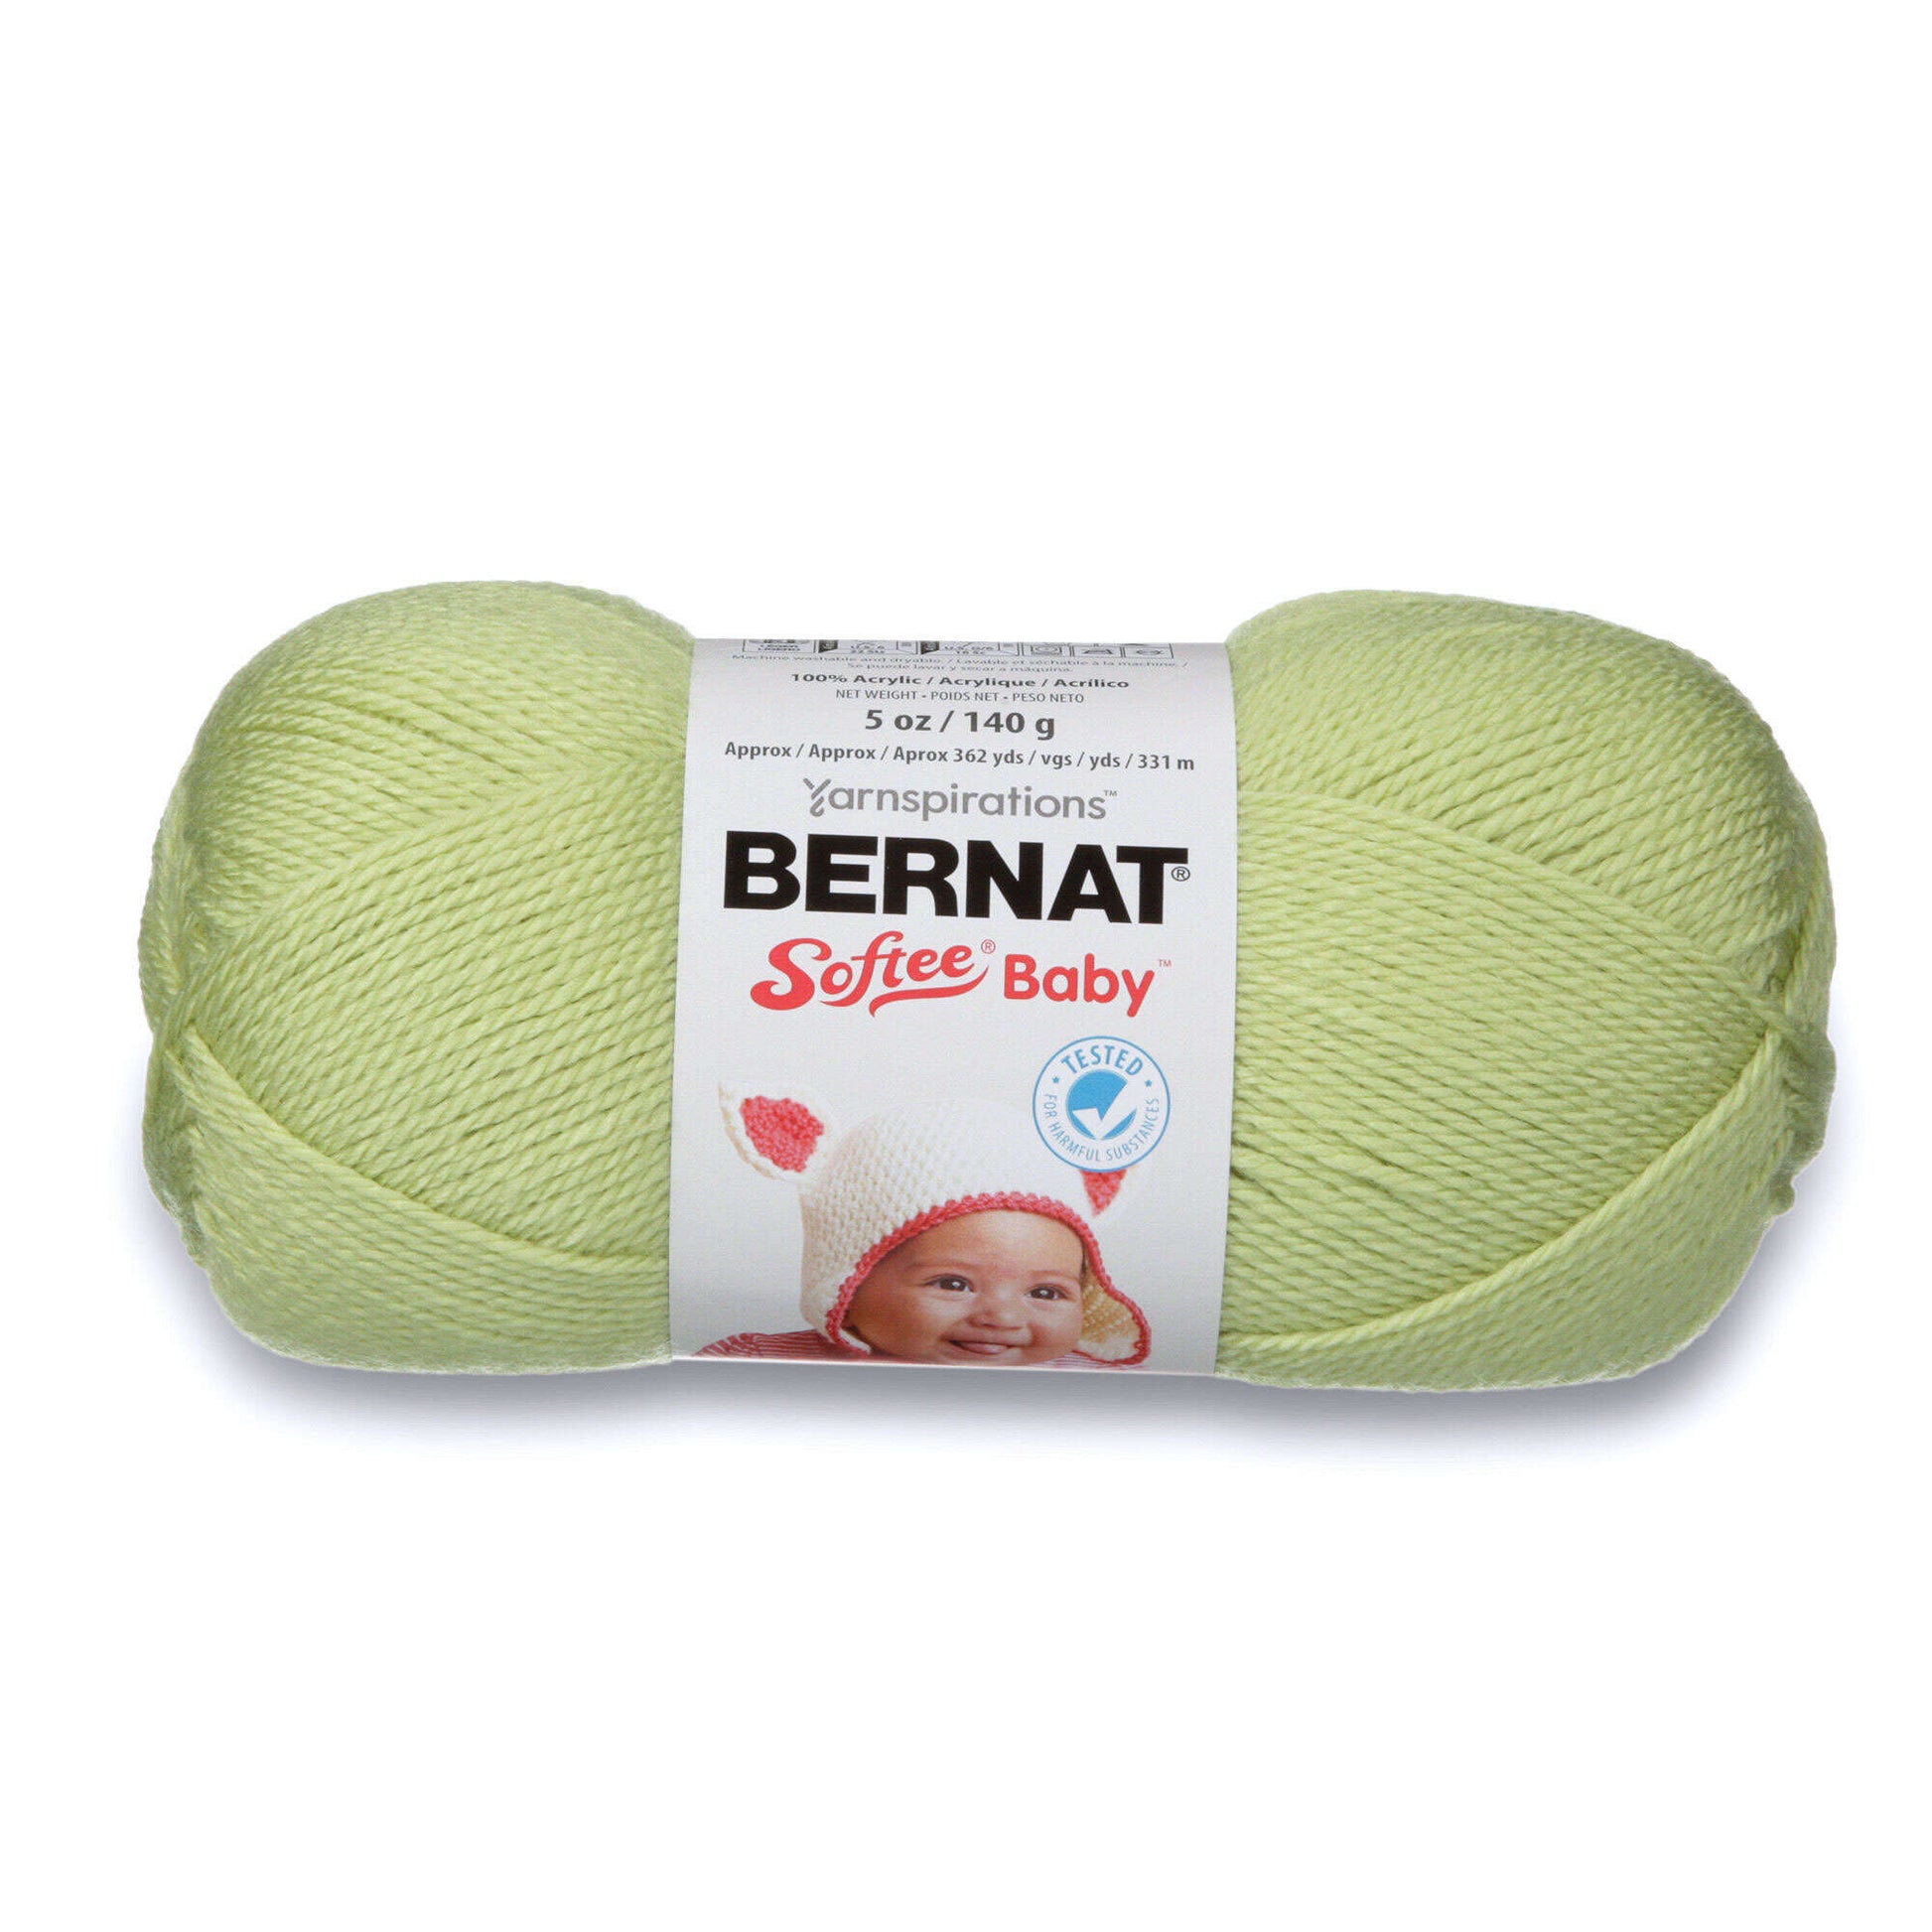 Bernat Softee Baby Yarn - Discontinued Shades